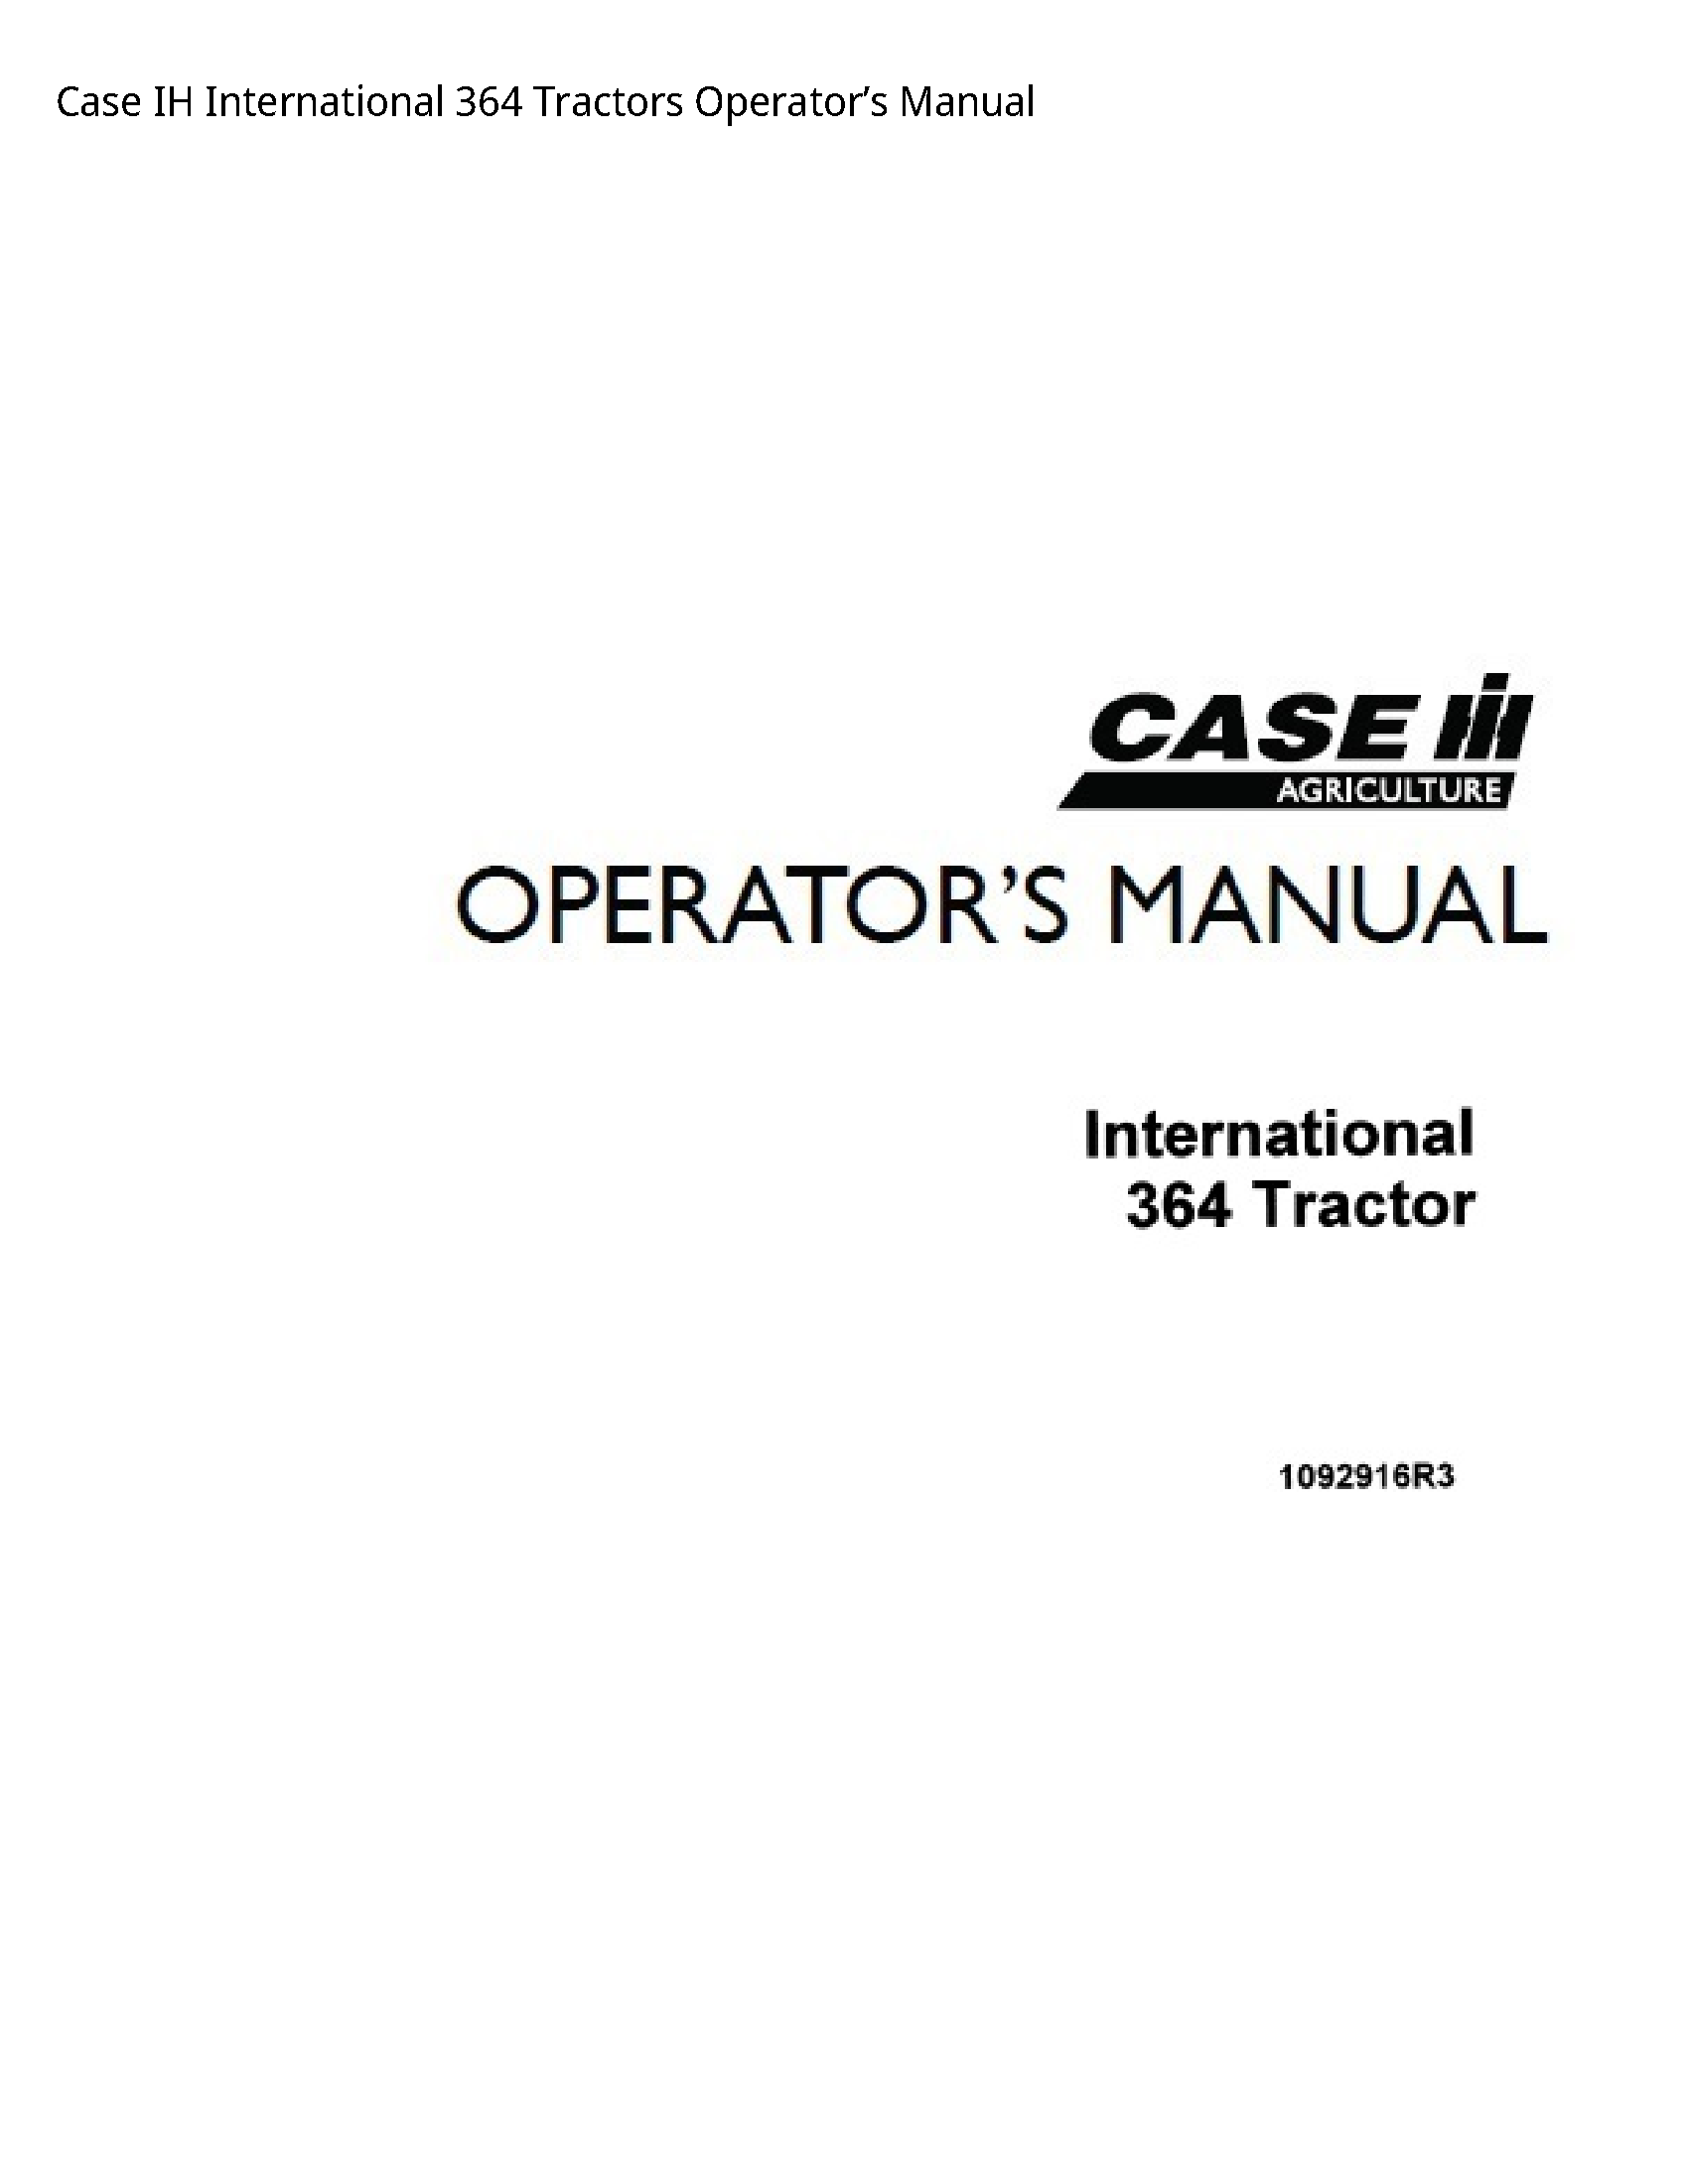 Case/Case IH 364 IH International Tractors Operator’s manual